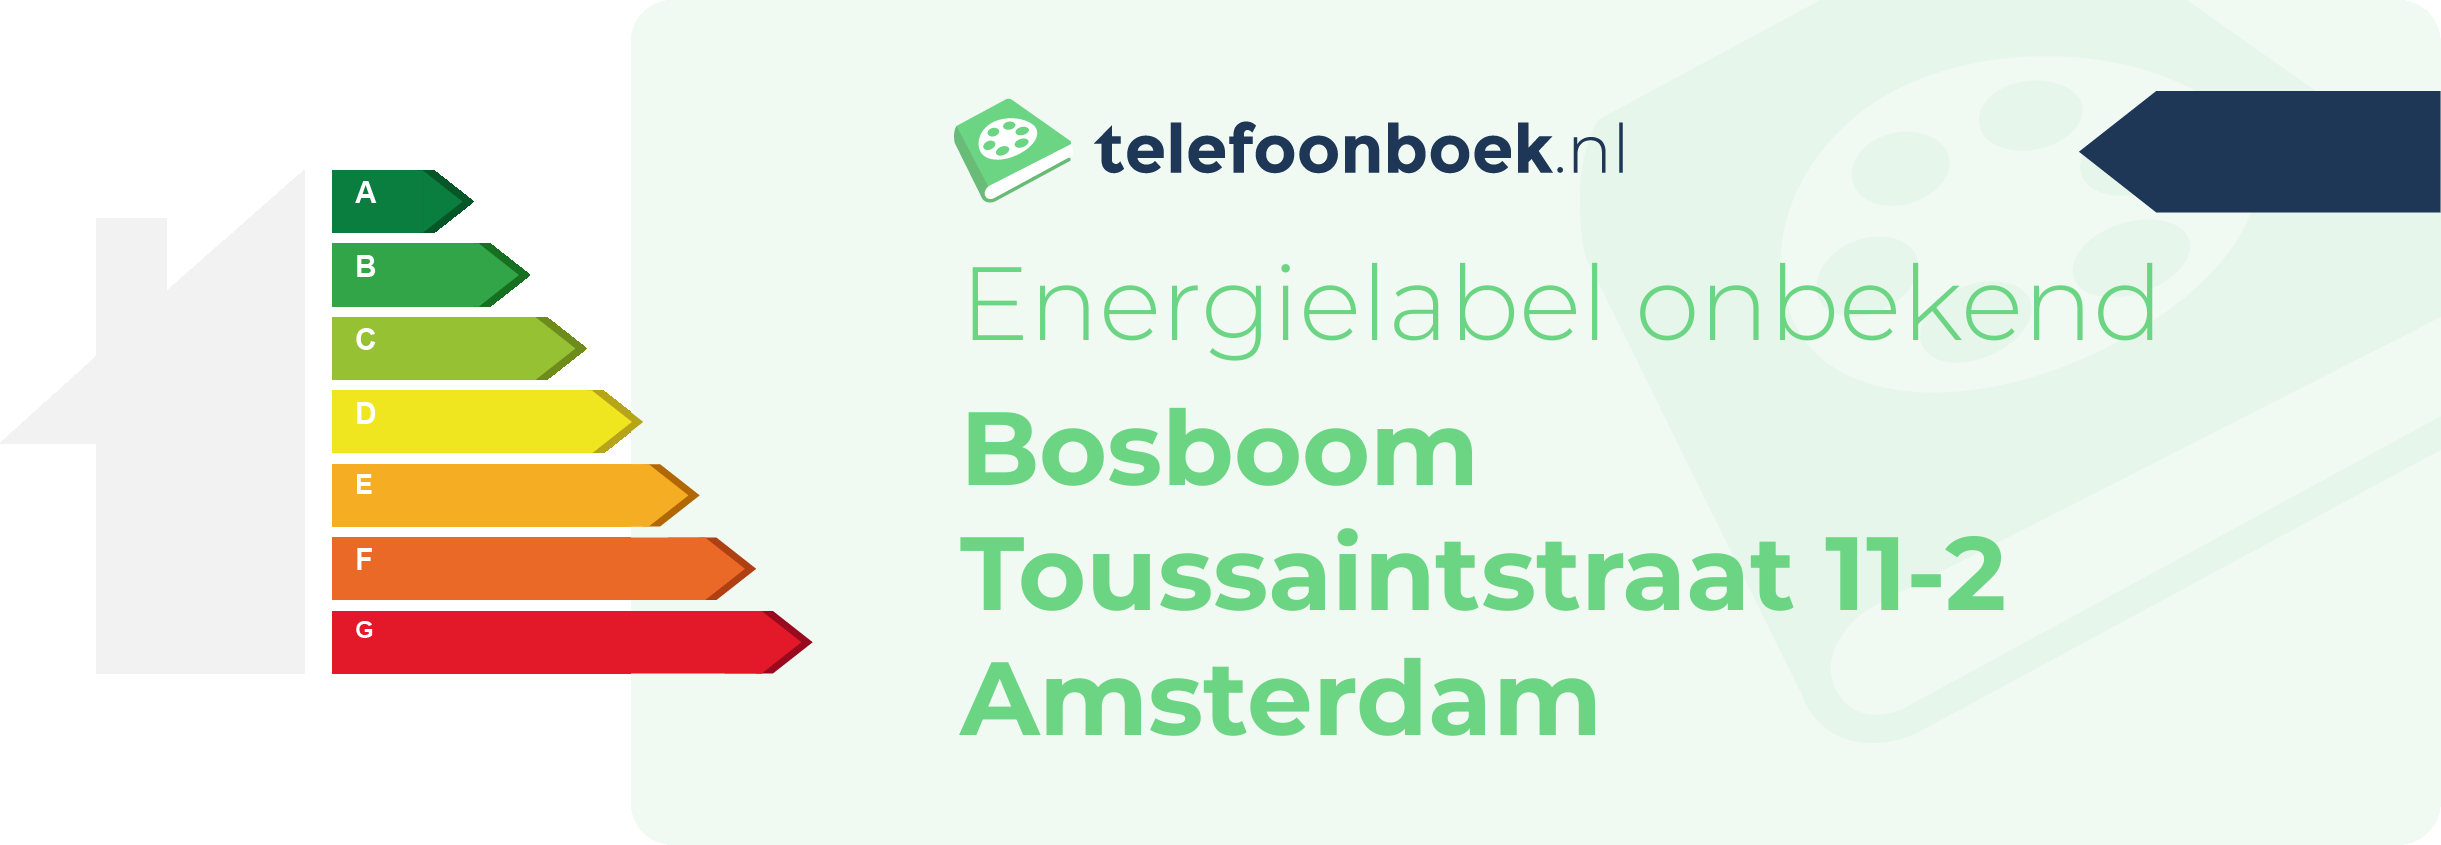 Energielabel Bosboom Toussaintstraat 11-2 Amsterdam